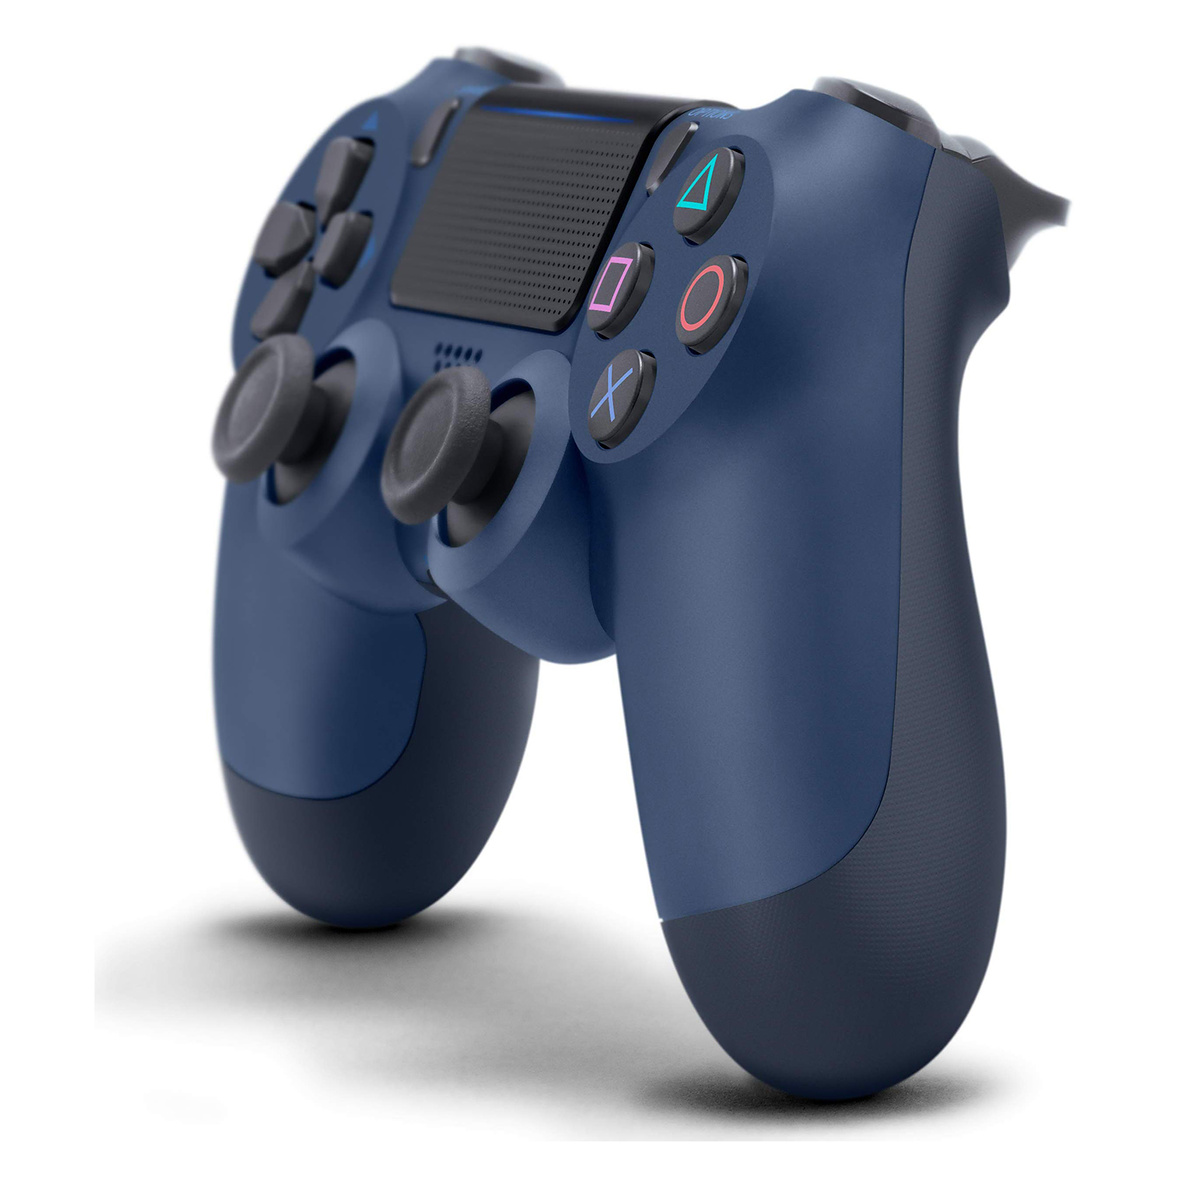 PS4 trådlös handkontroll, blå